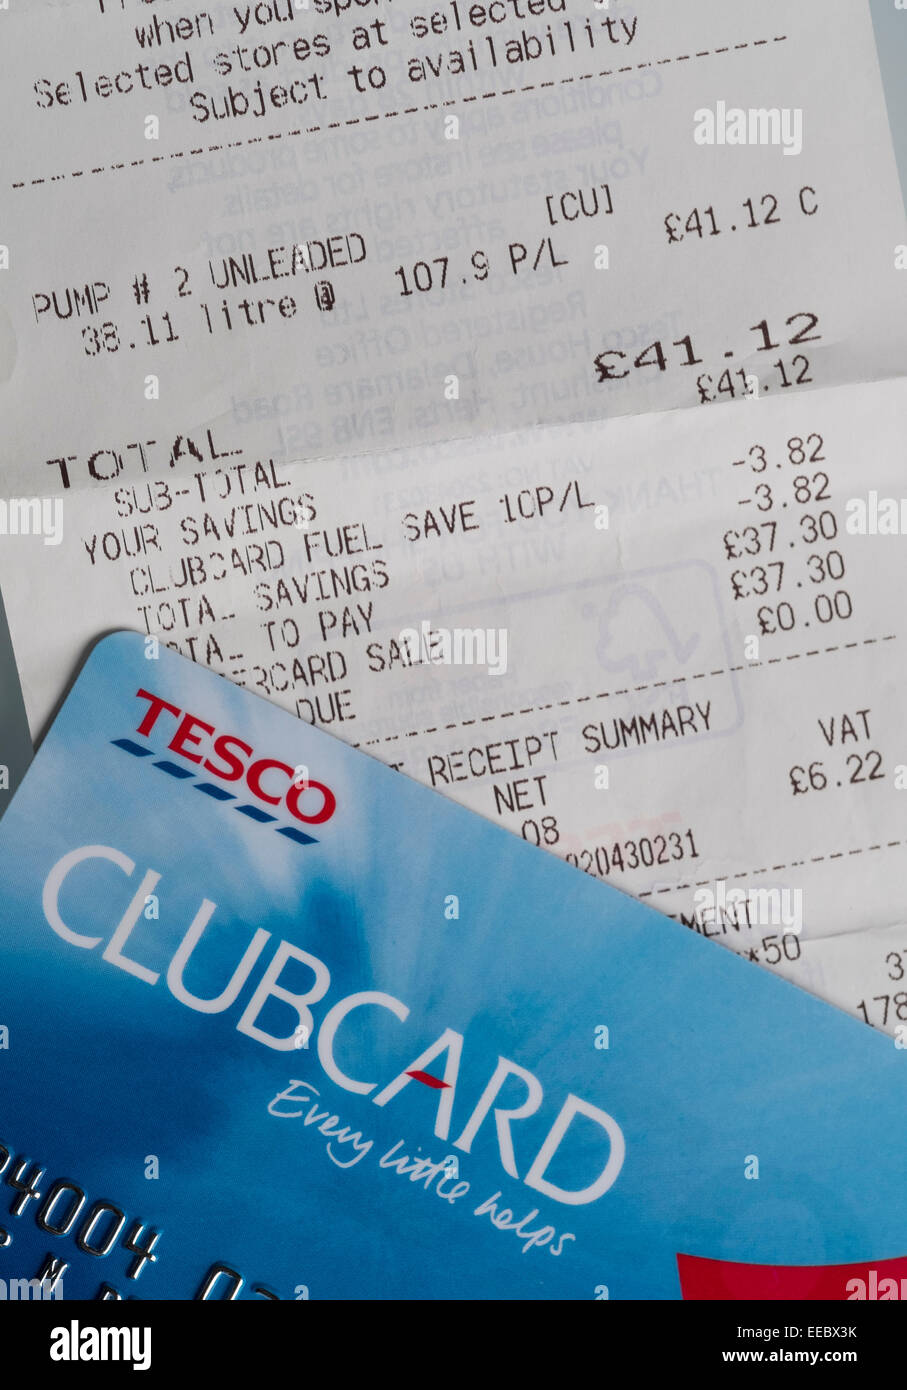 Tesco Clubcard fuel price till receipt savings for petrol or diesel. Stock Photo